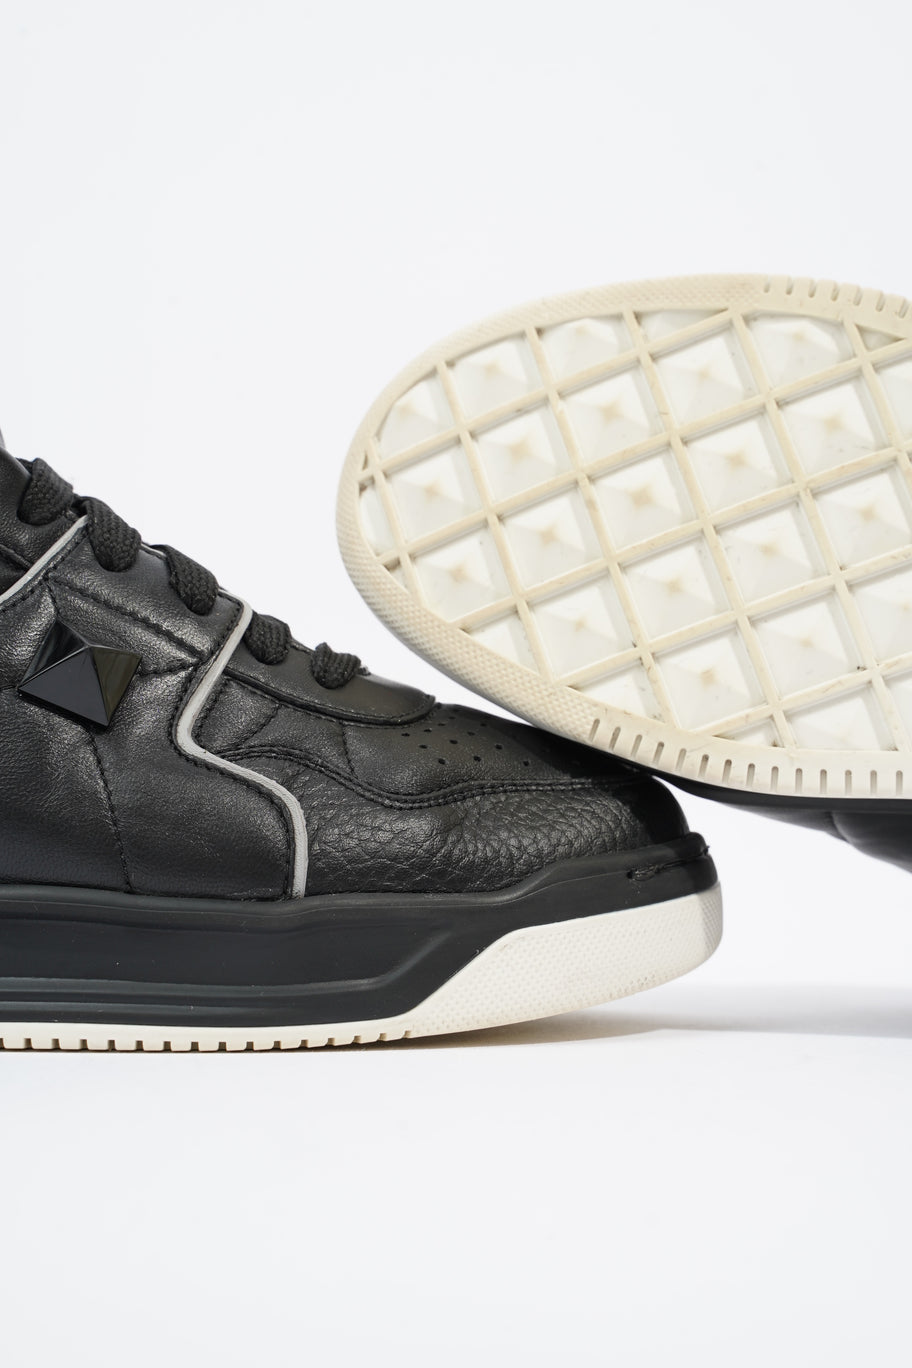 One Stud Sneakers Black / Grey Leather EU 40 UK 6 Image 10